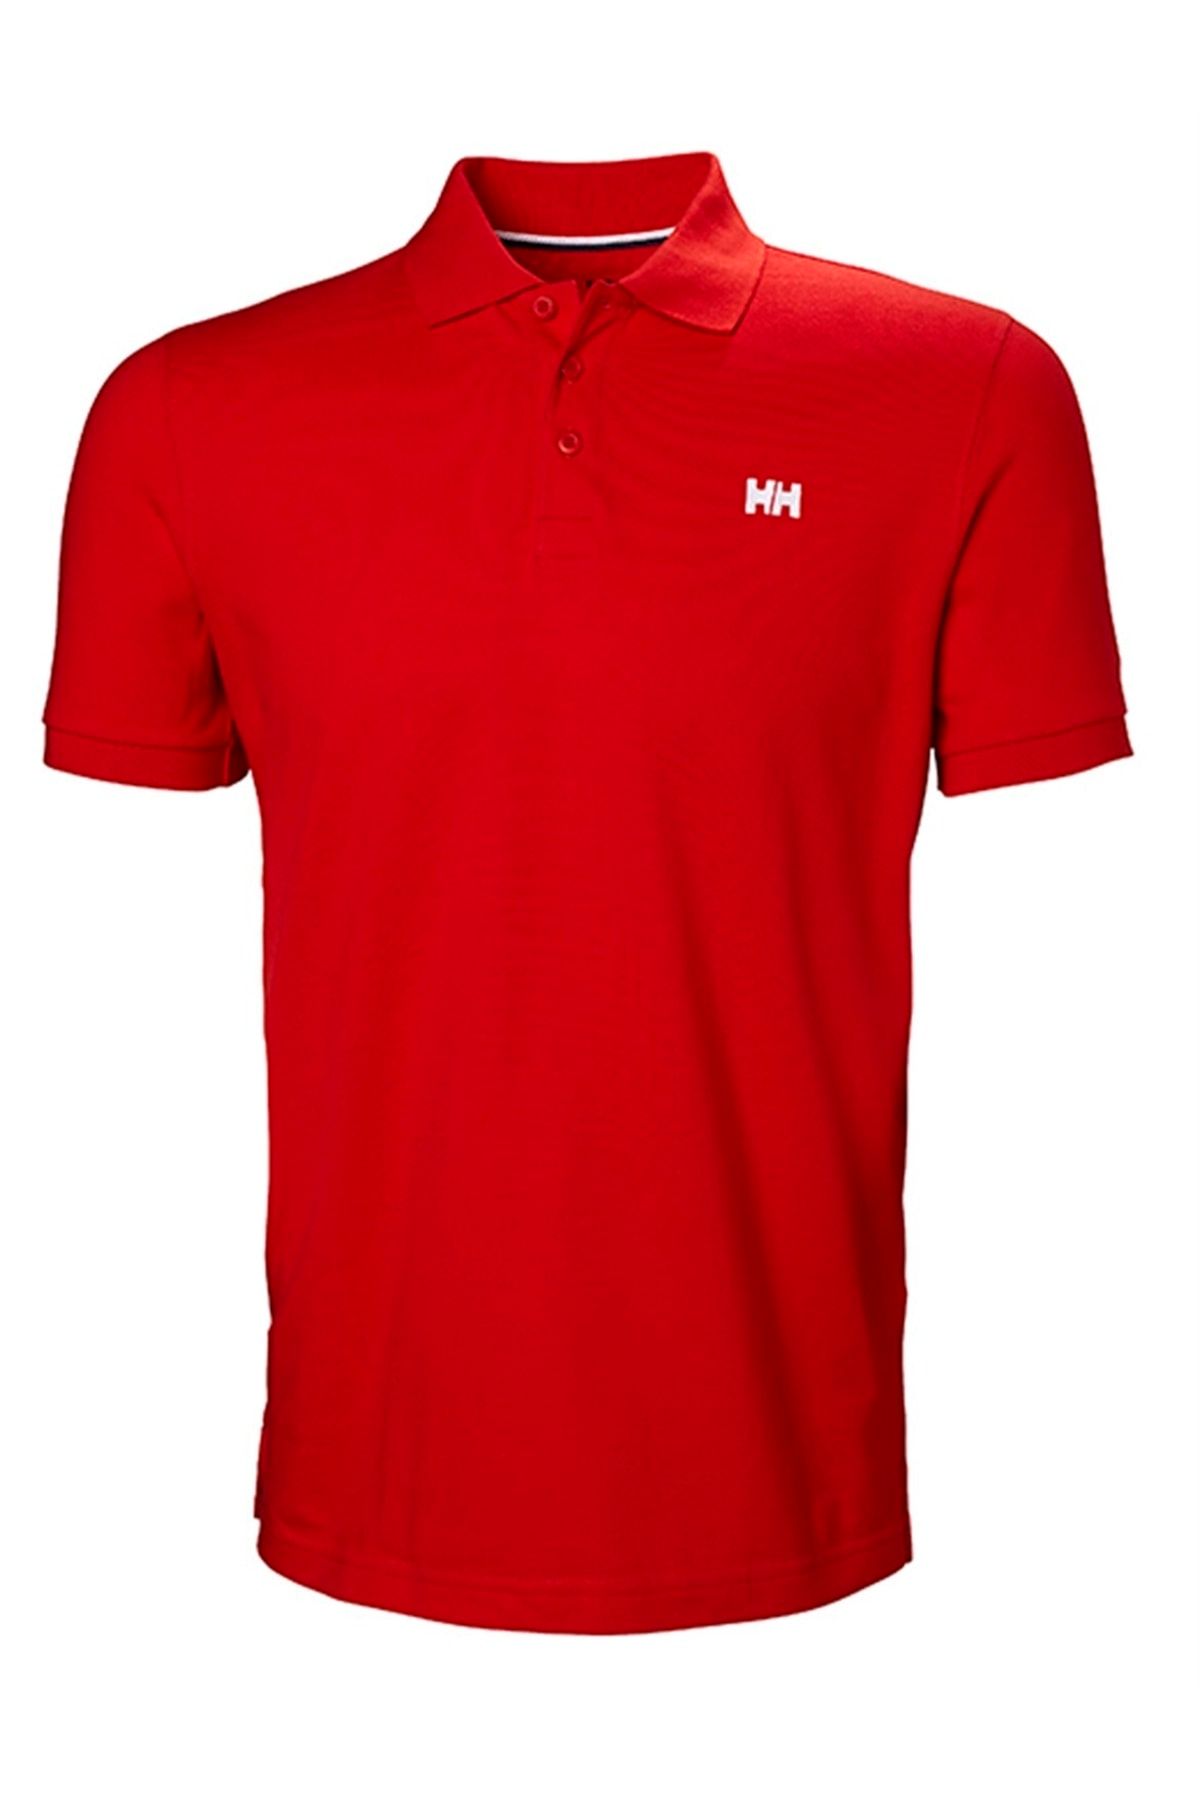 Helly Hansen Hha.33980 - Transat Polo Erkek T-shirt